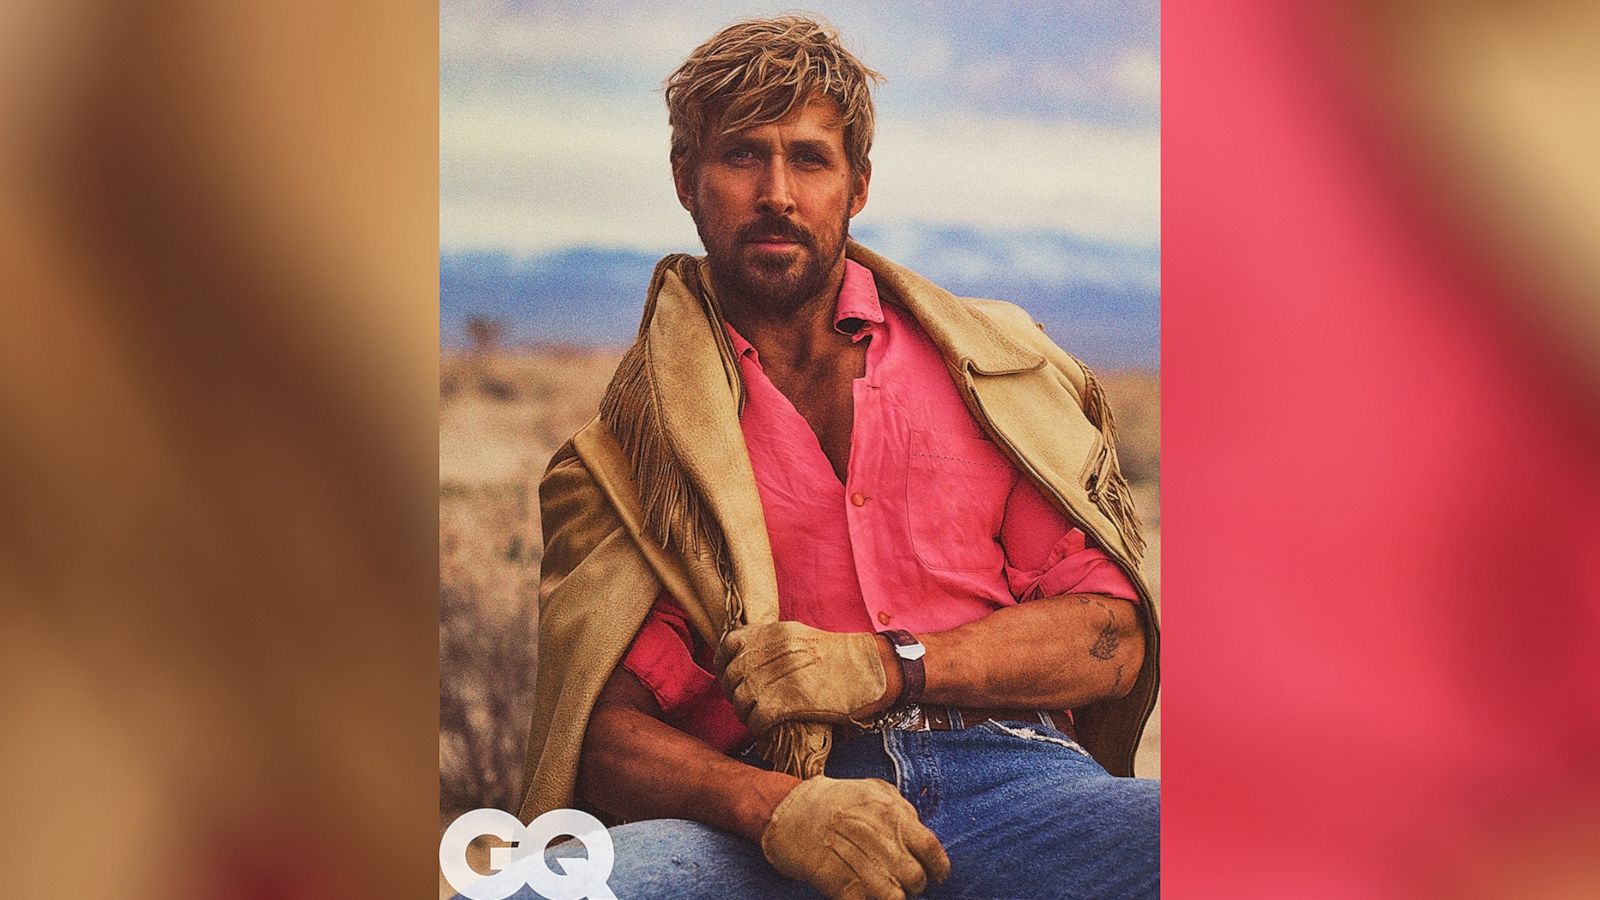 Wallpaper : portrait, Ryan Gosling, Driver, Drive, ART, film, darkness,  fiction 2614x1641 - - 579859 - HD Wallpapers - WallHere